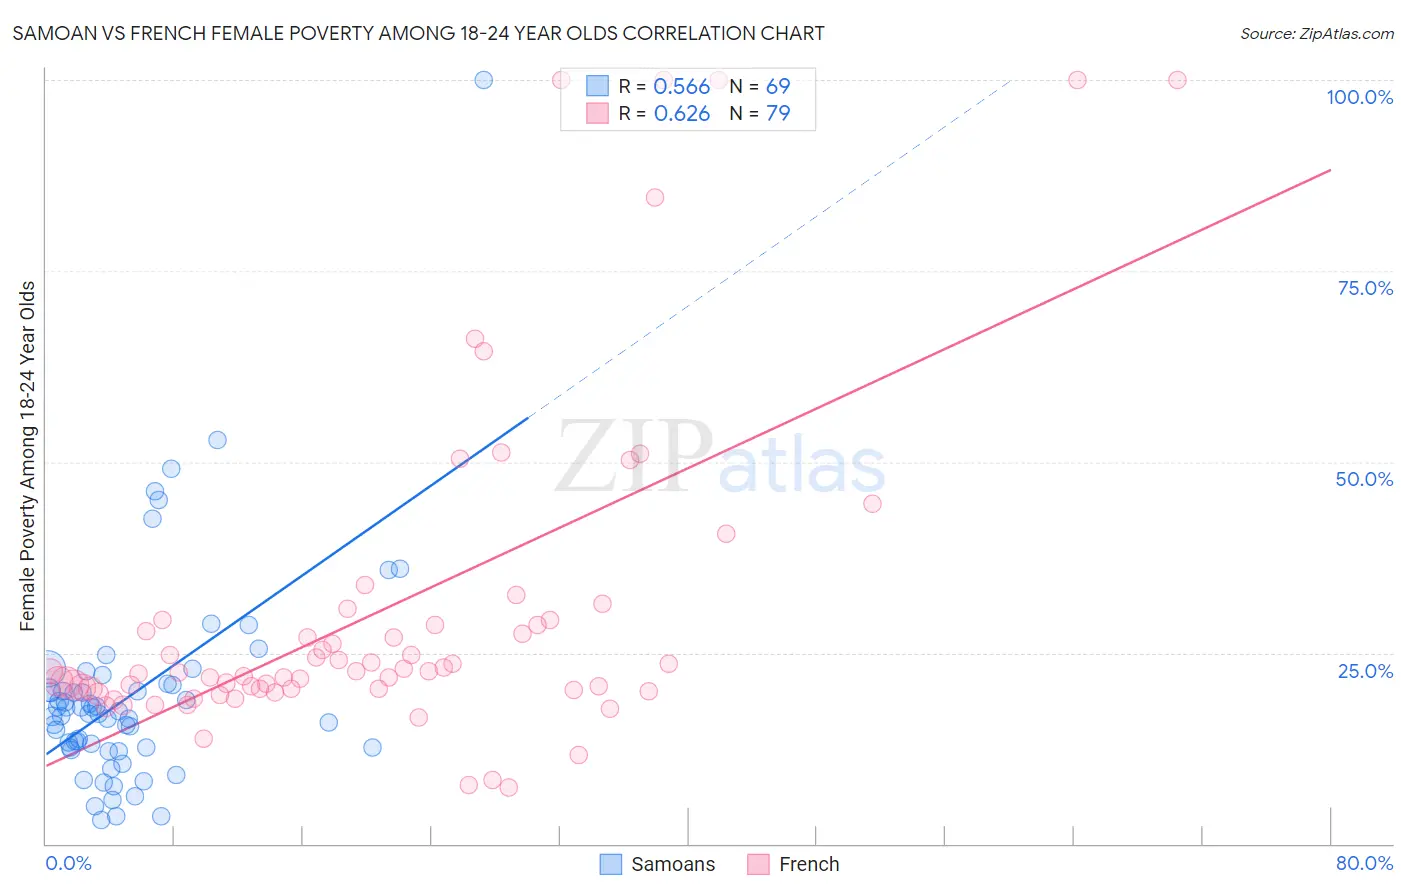 Samoan vs French Female Poverty Among 18-24 Year Olds